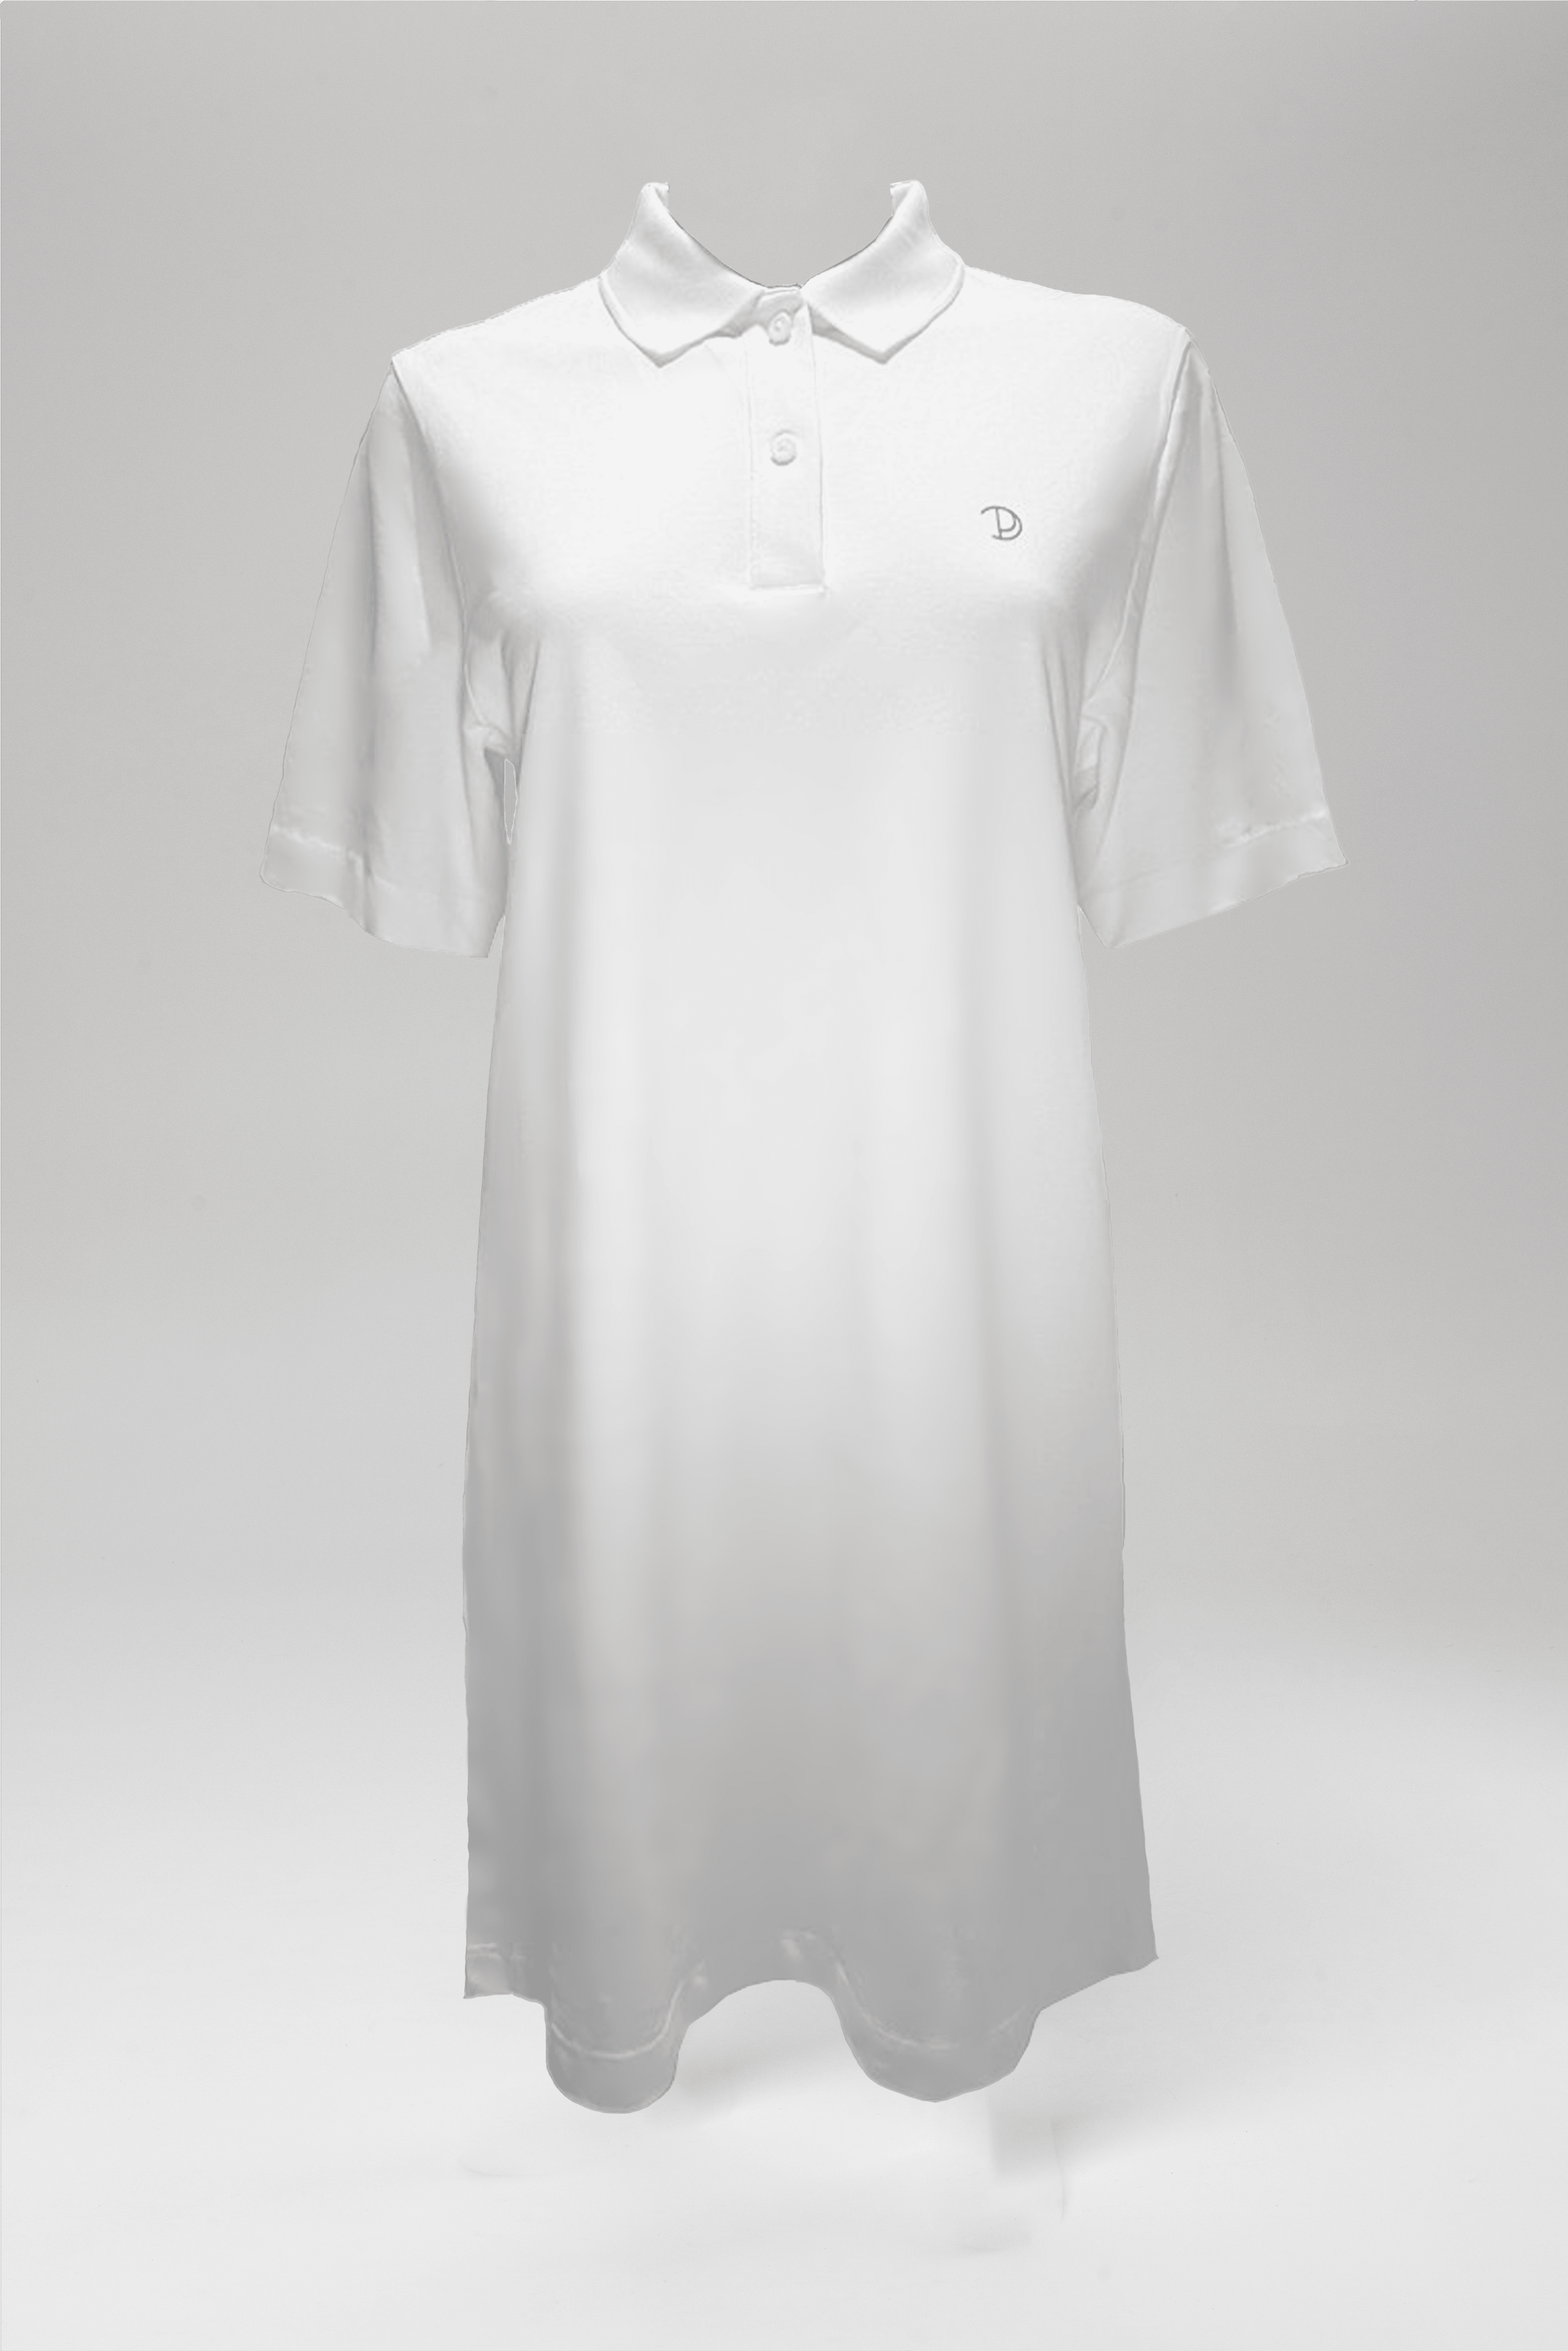 Printed P Polo Shirt Dress